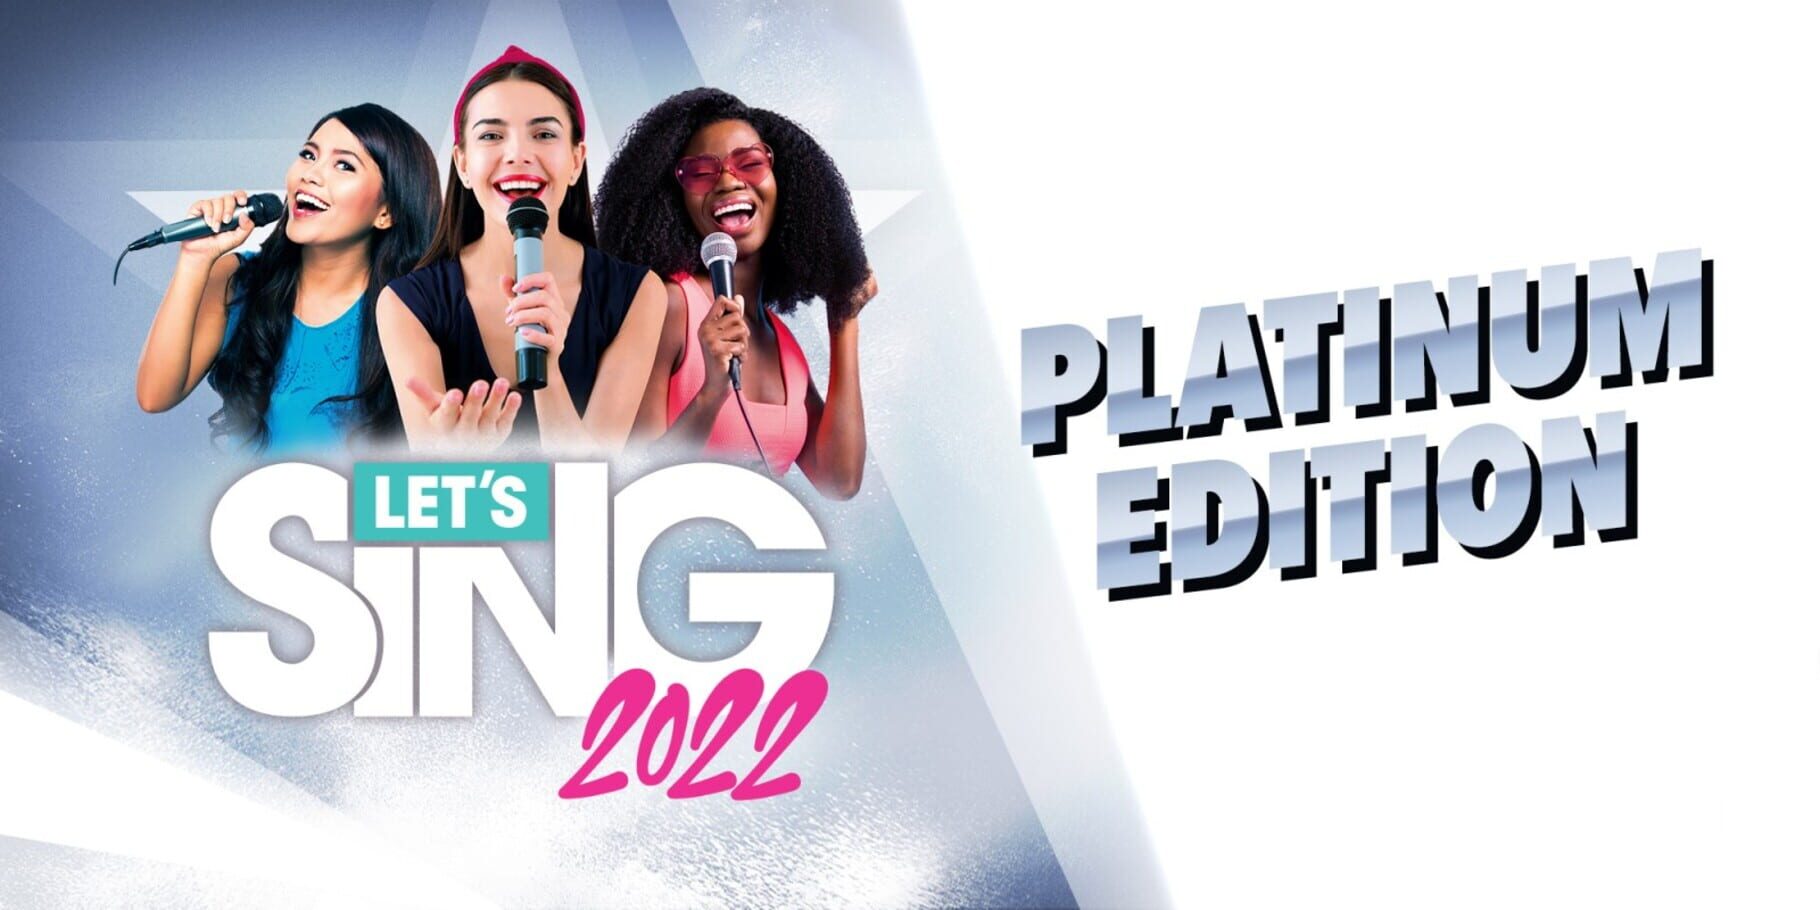 Let's Sing 2022: Platinum Edition Image